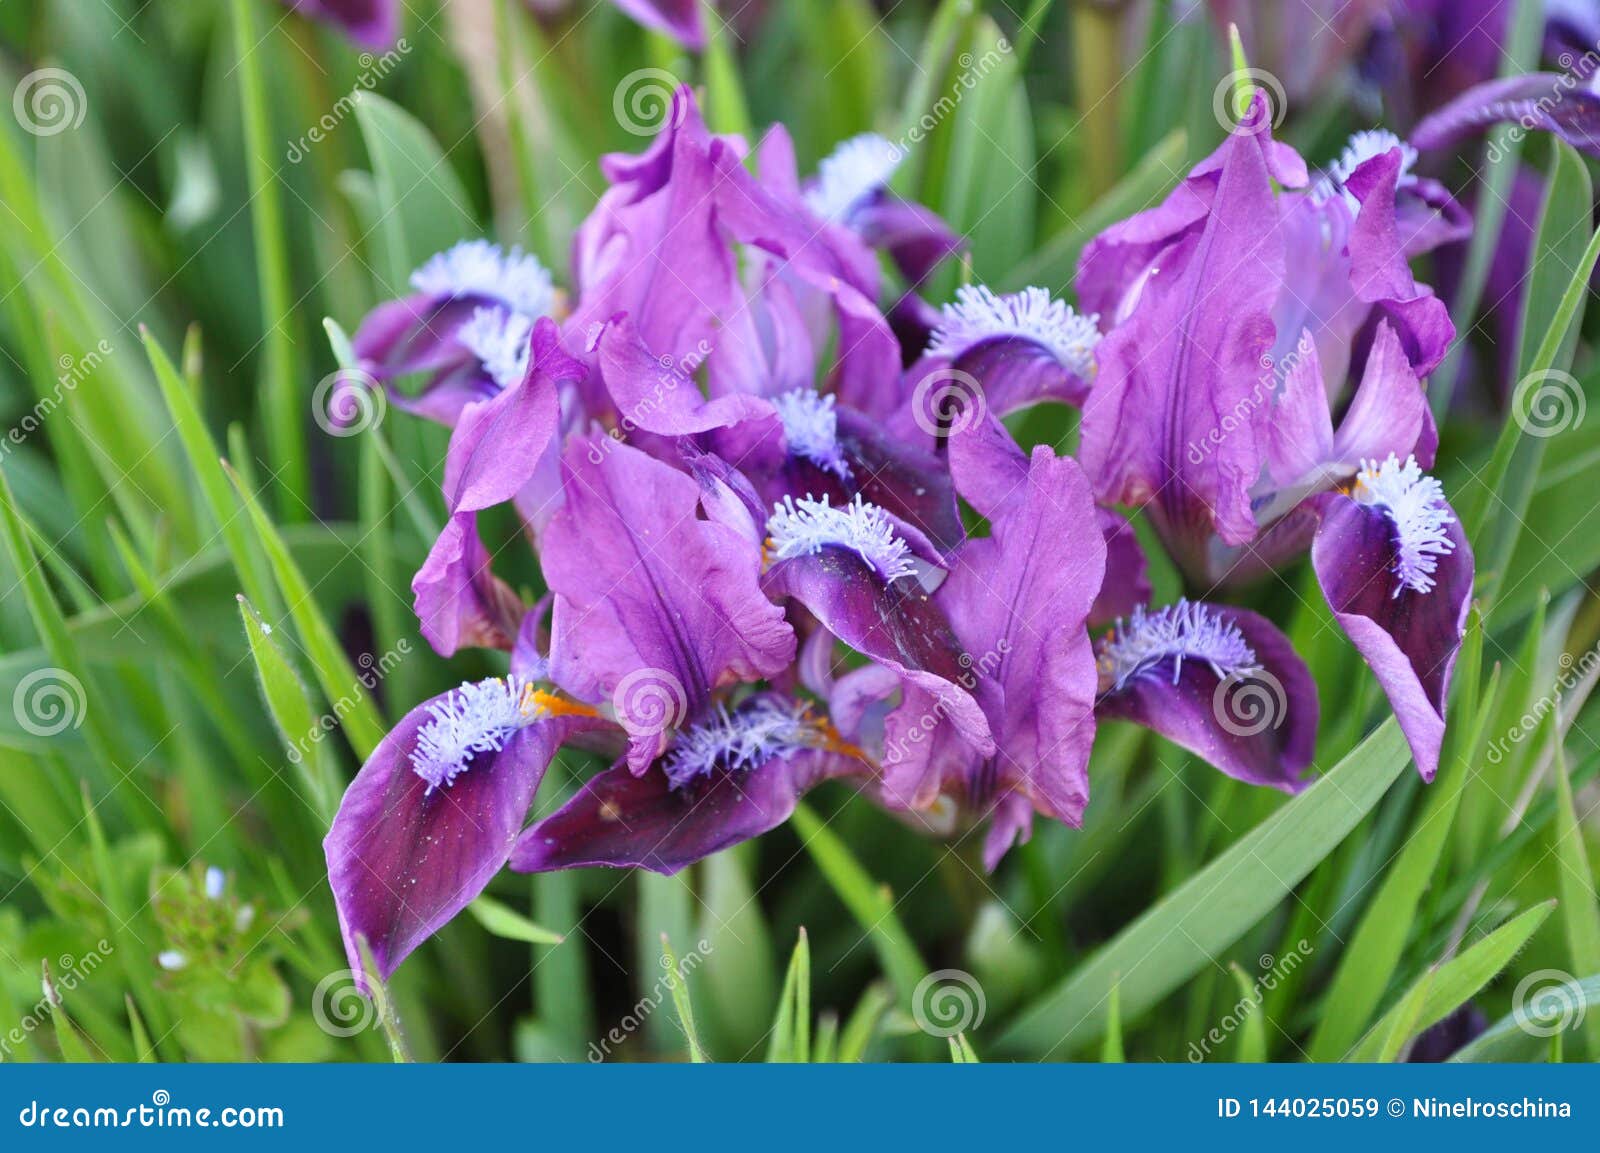 Violet Irises with Light Blue Stamens Closeup Stock Image - Image of ...